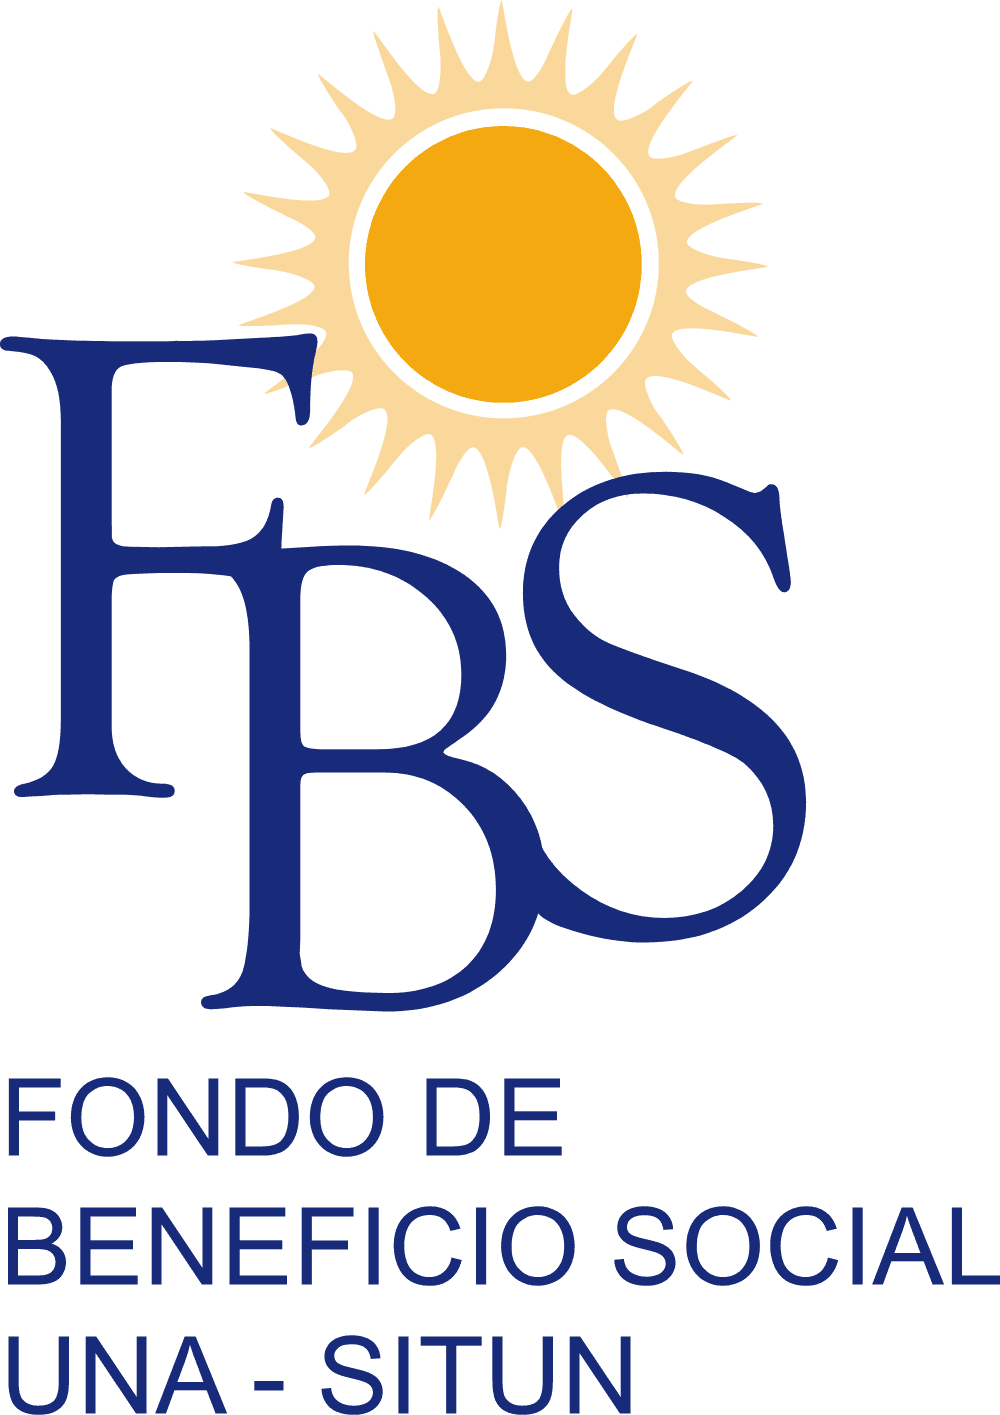 FBS Logo download